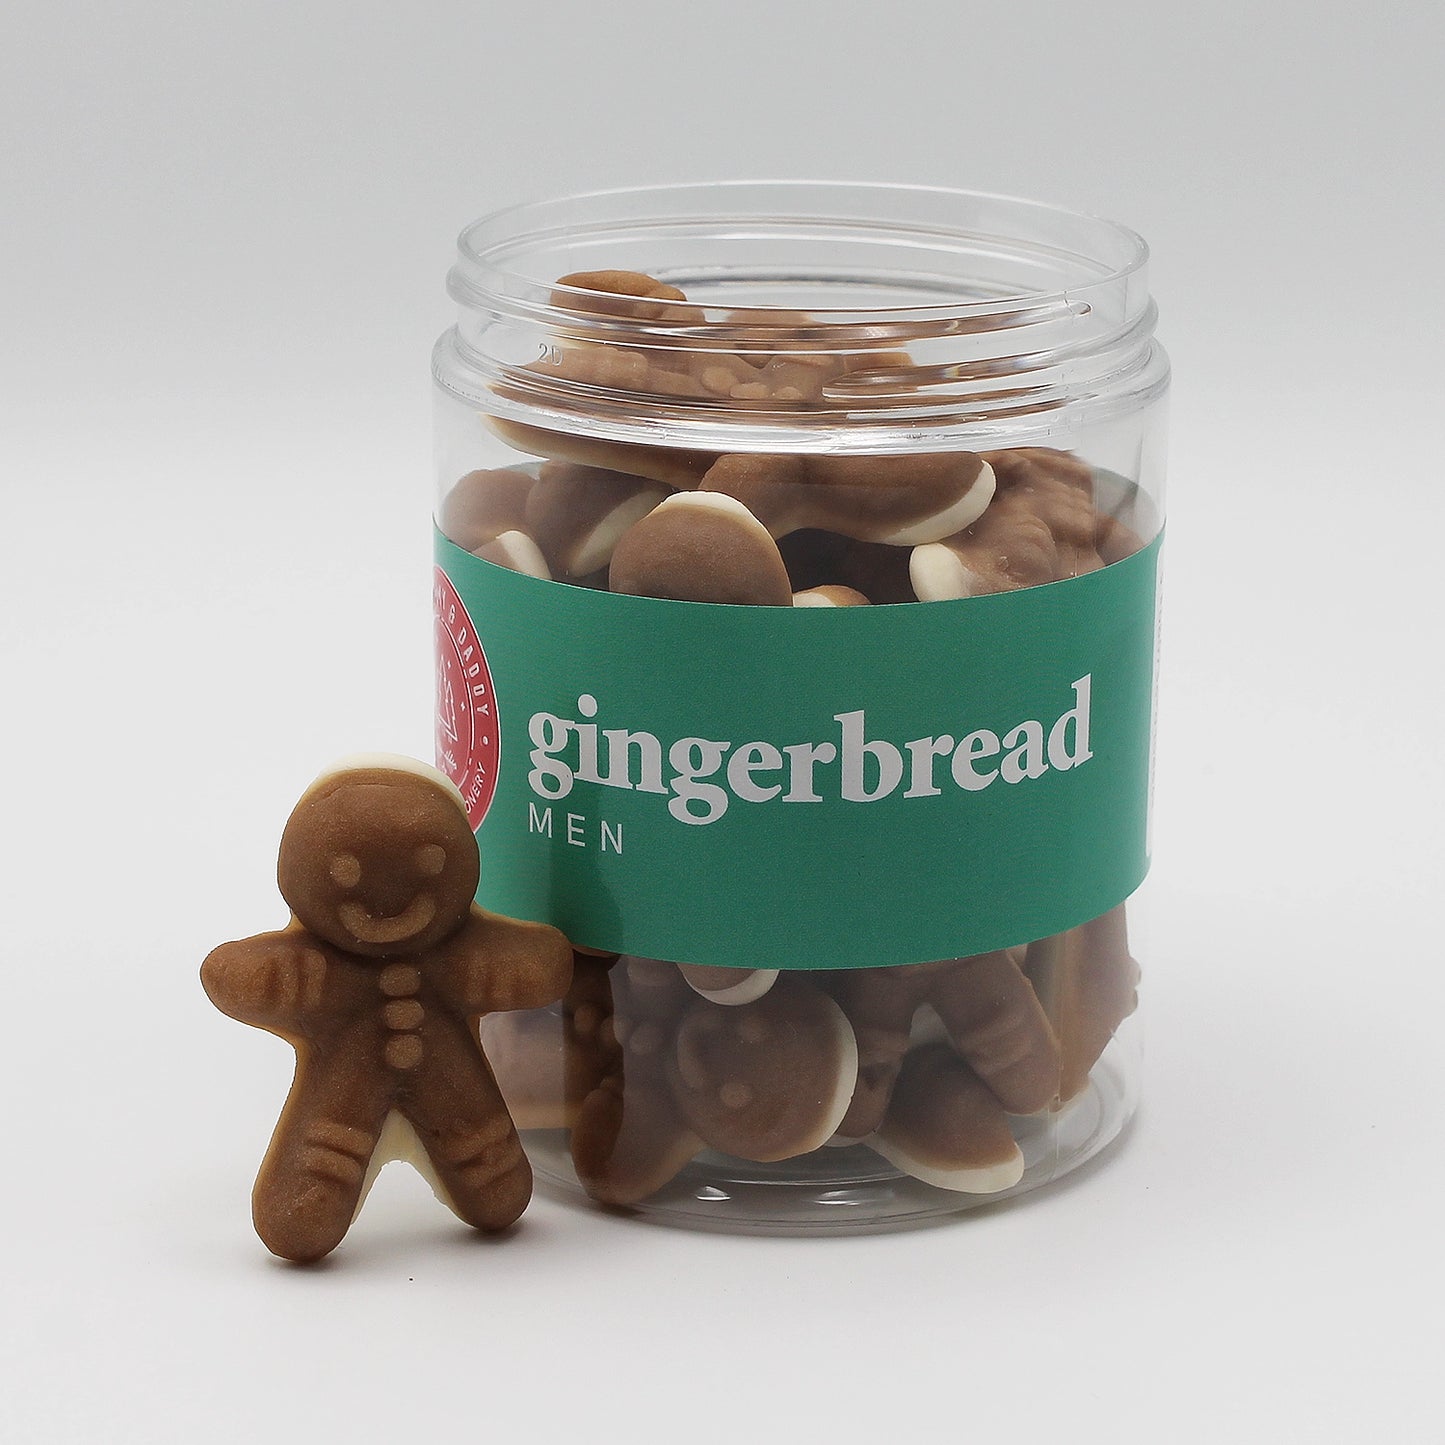 Gingerbread (run, run as fast as you can!) Gift Box